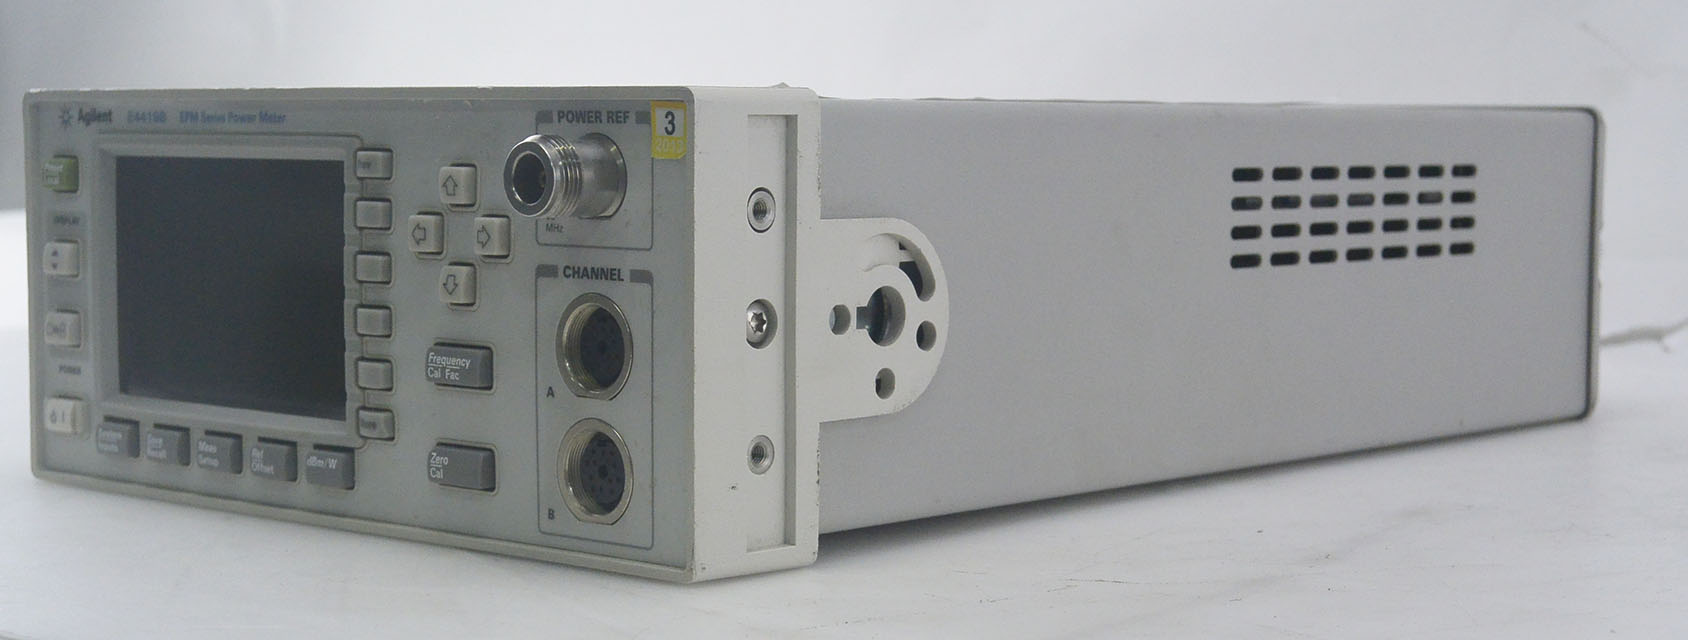 Keysight(Agilent) E4419B EPM Series Dual-Channel Power Meter